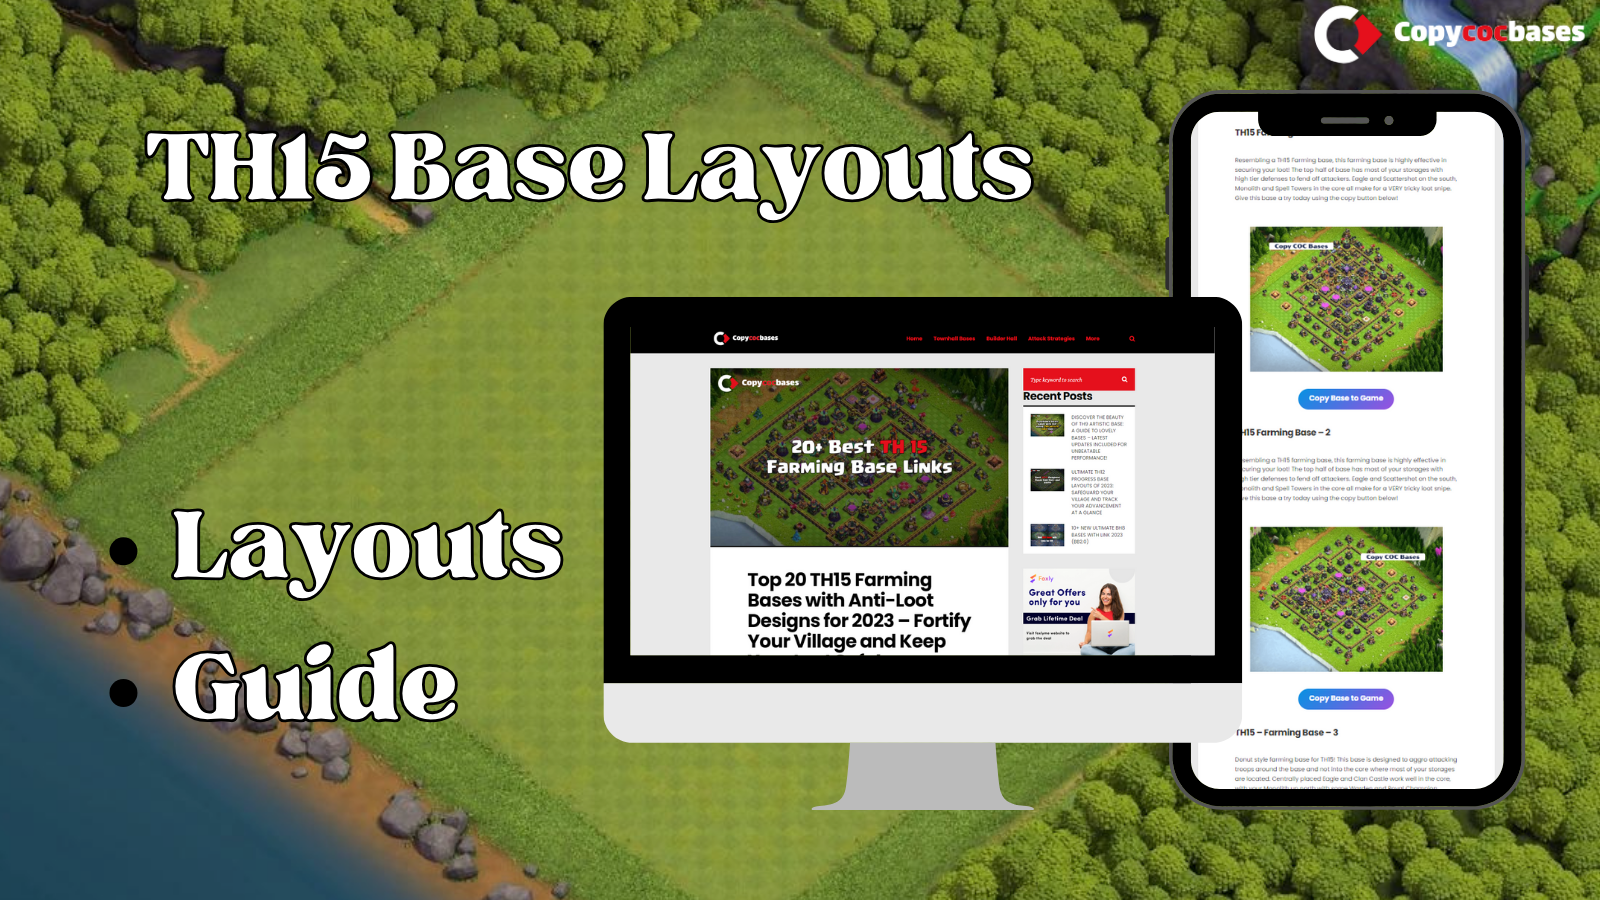 TH15 Base Layouts: CopyCocBases’ Top Picks